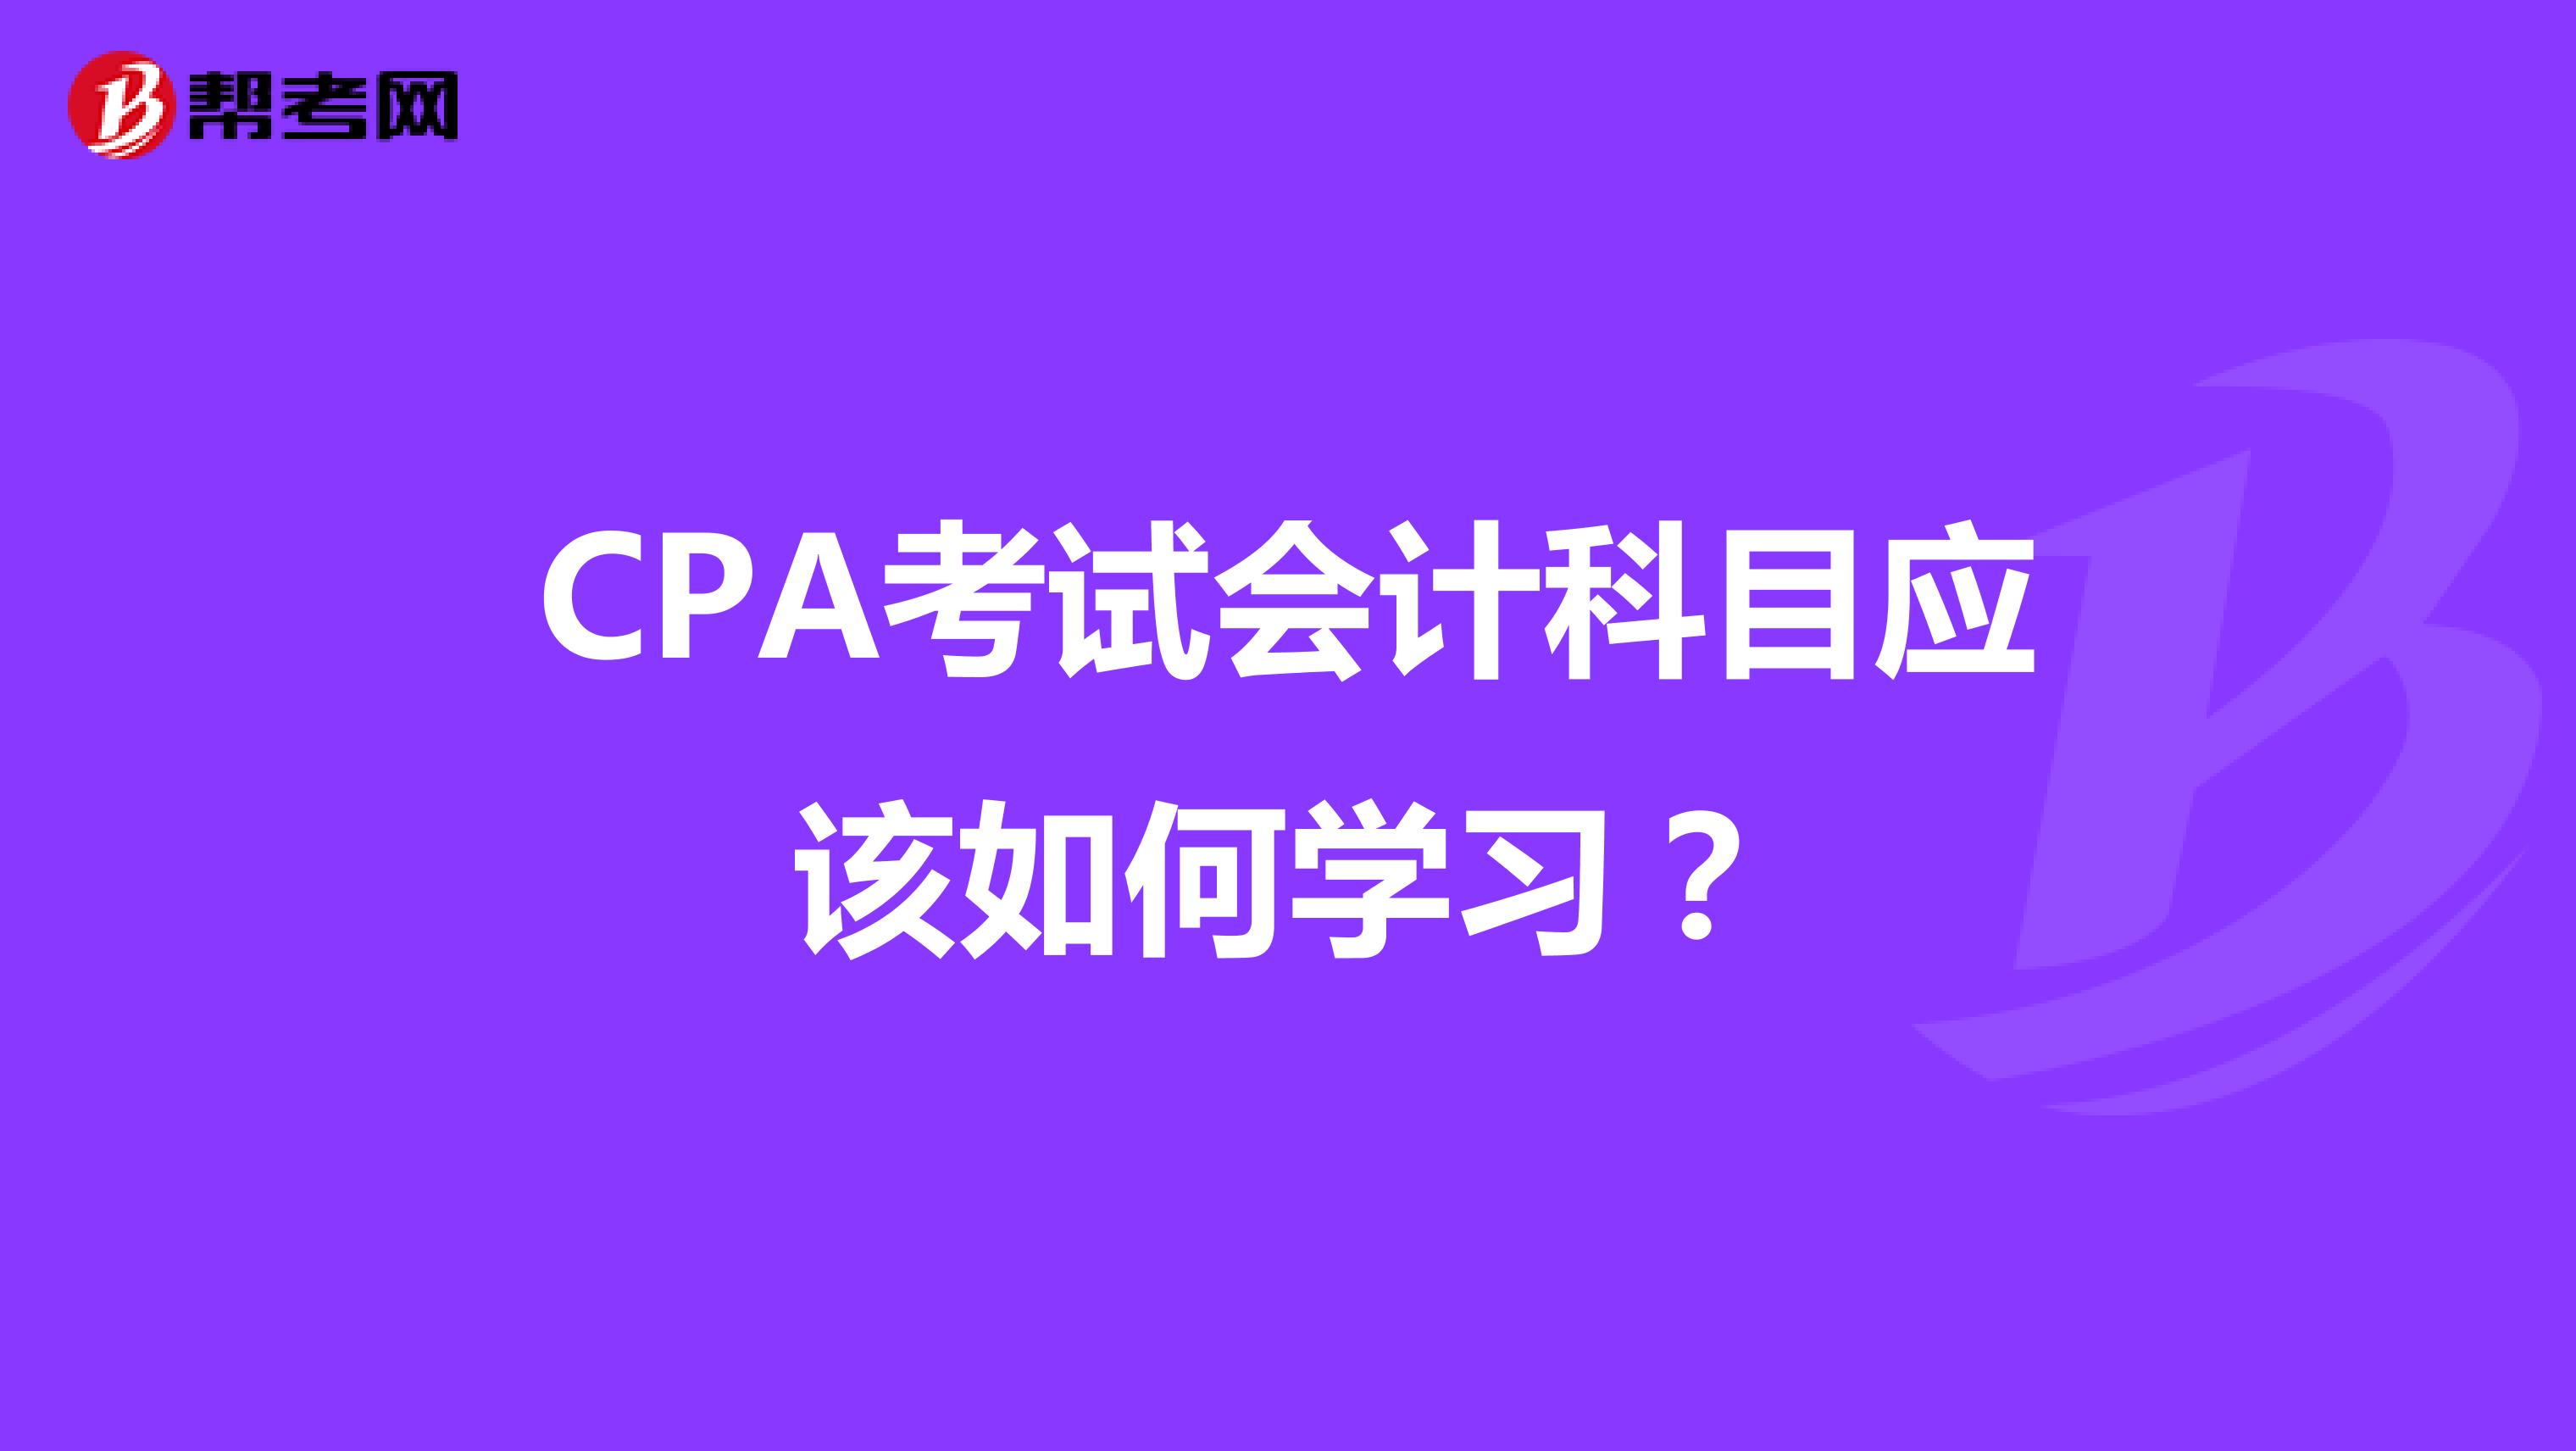 CPA考试会计科目应该如何学习？